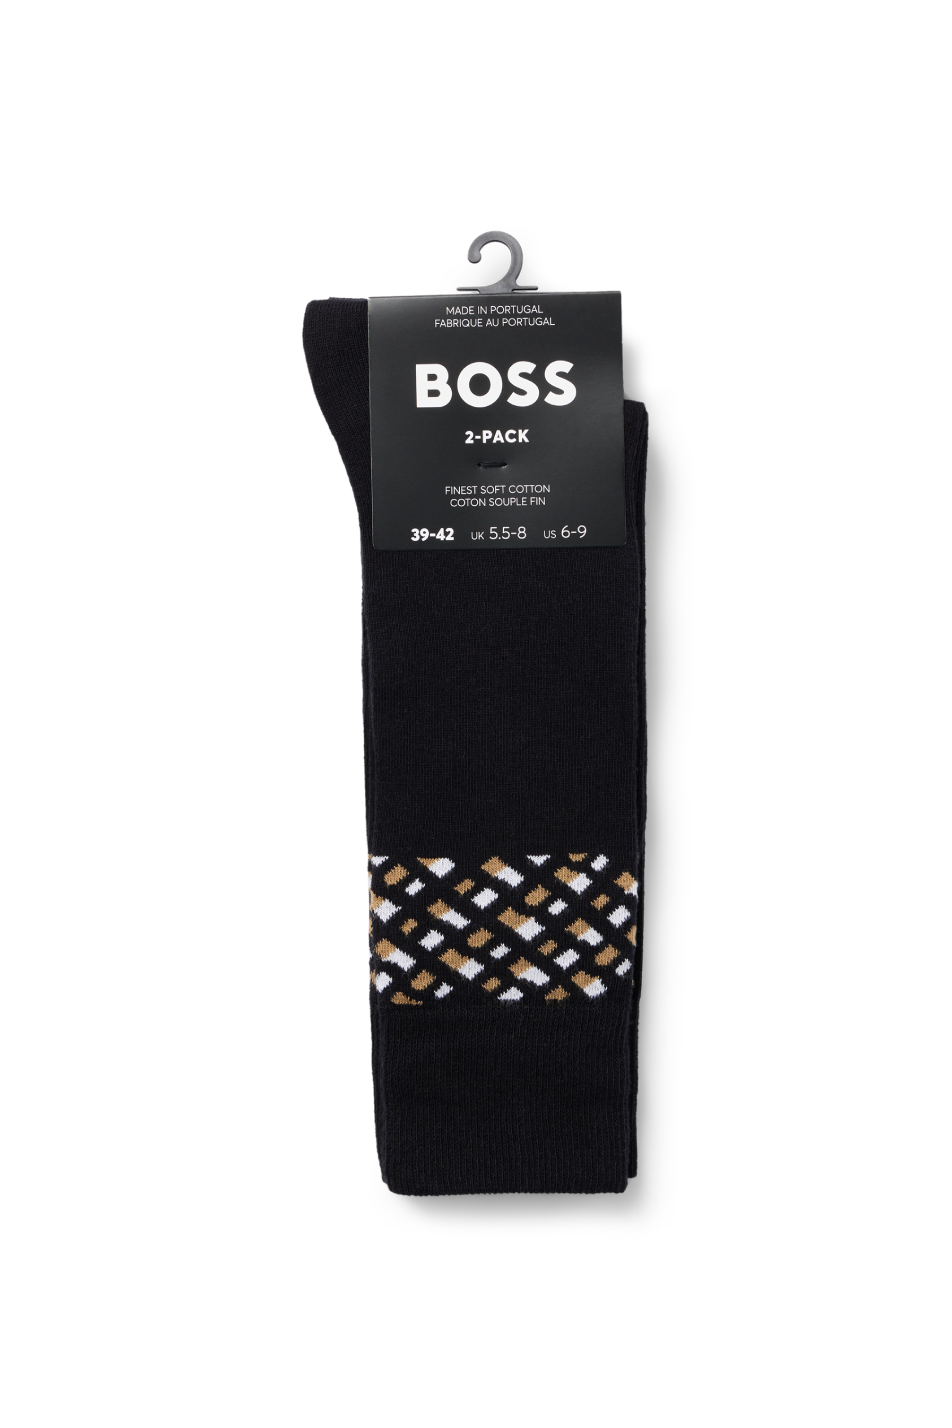 Boss 2 Pack RS Mono Block Sock